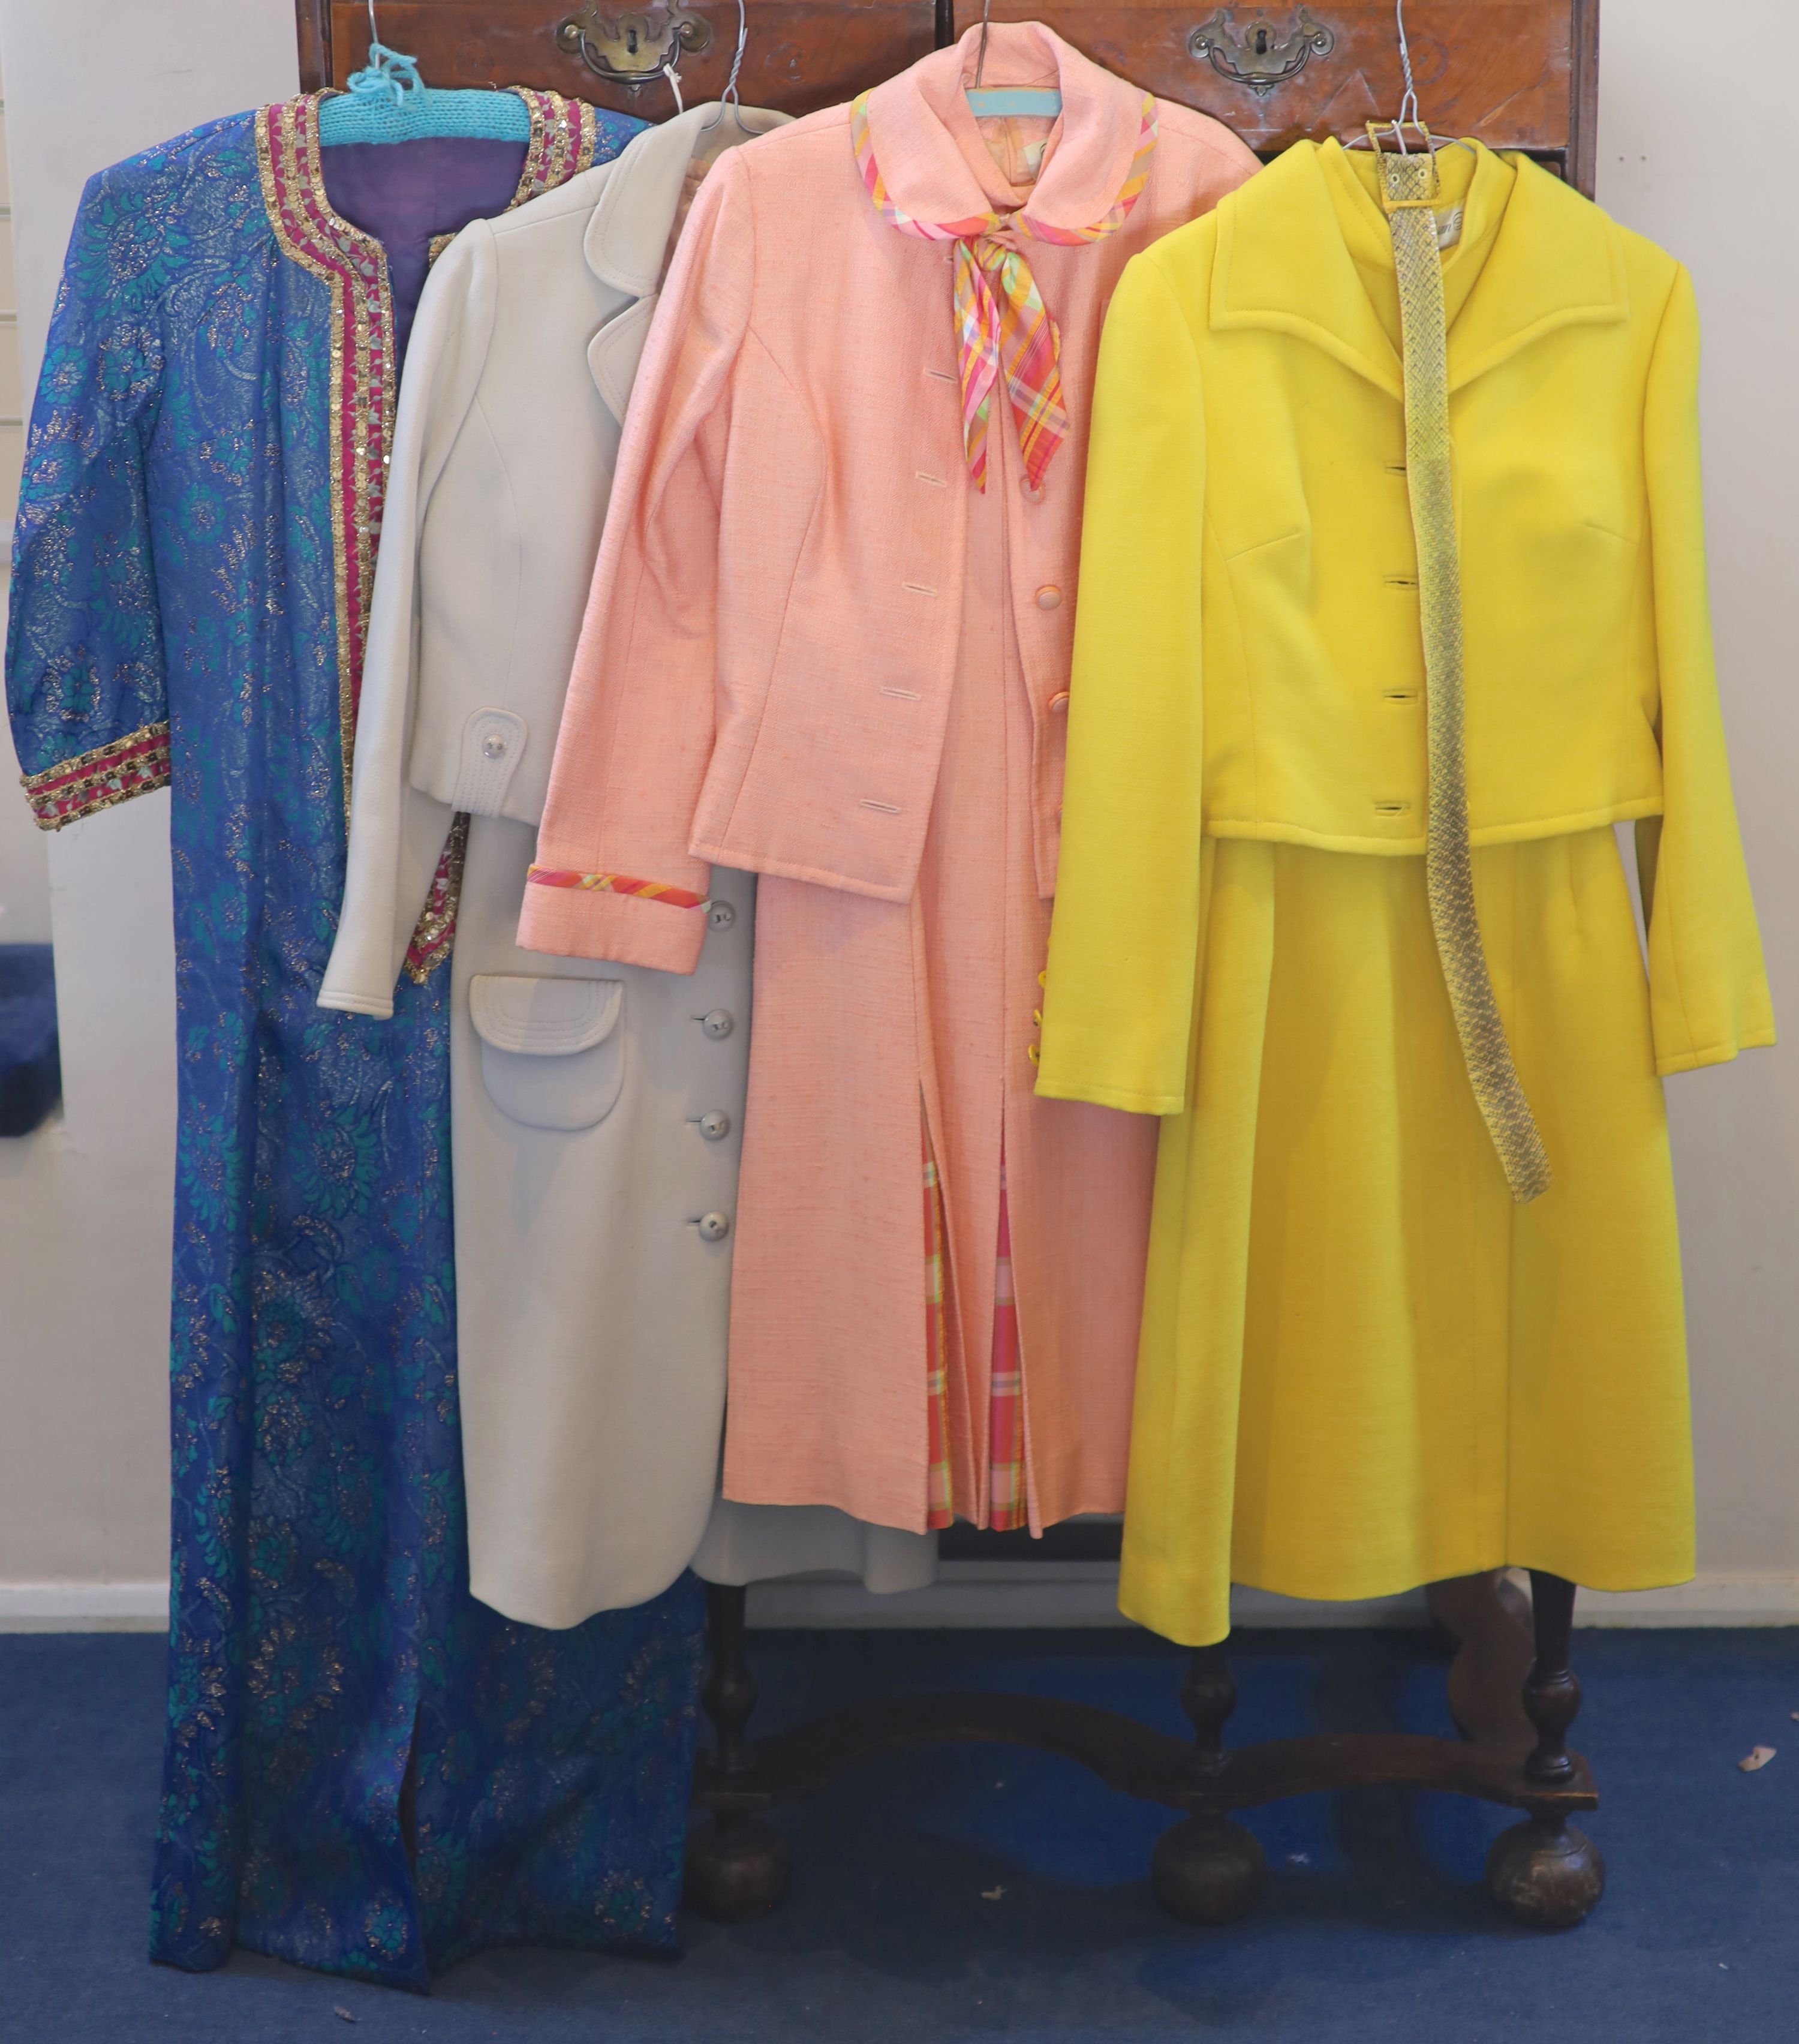 Three Susan Small dress and jacket suits and a lurex kaftan